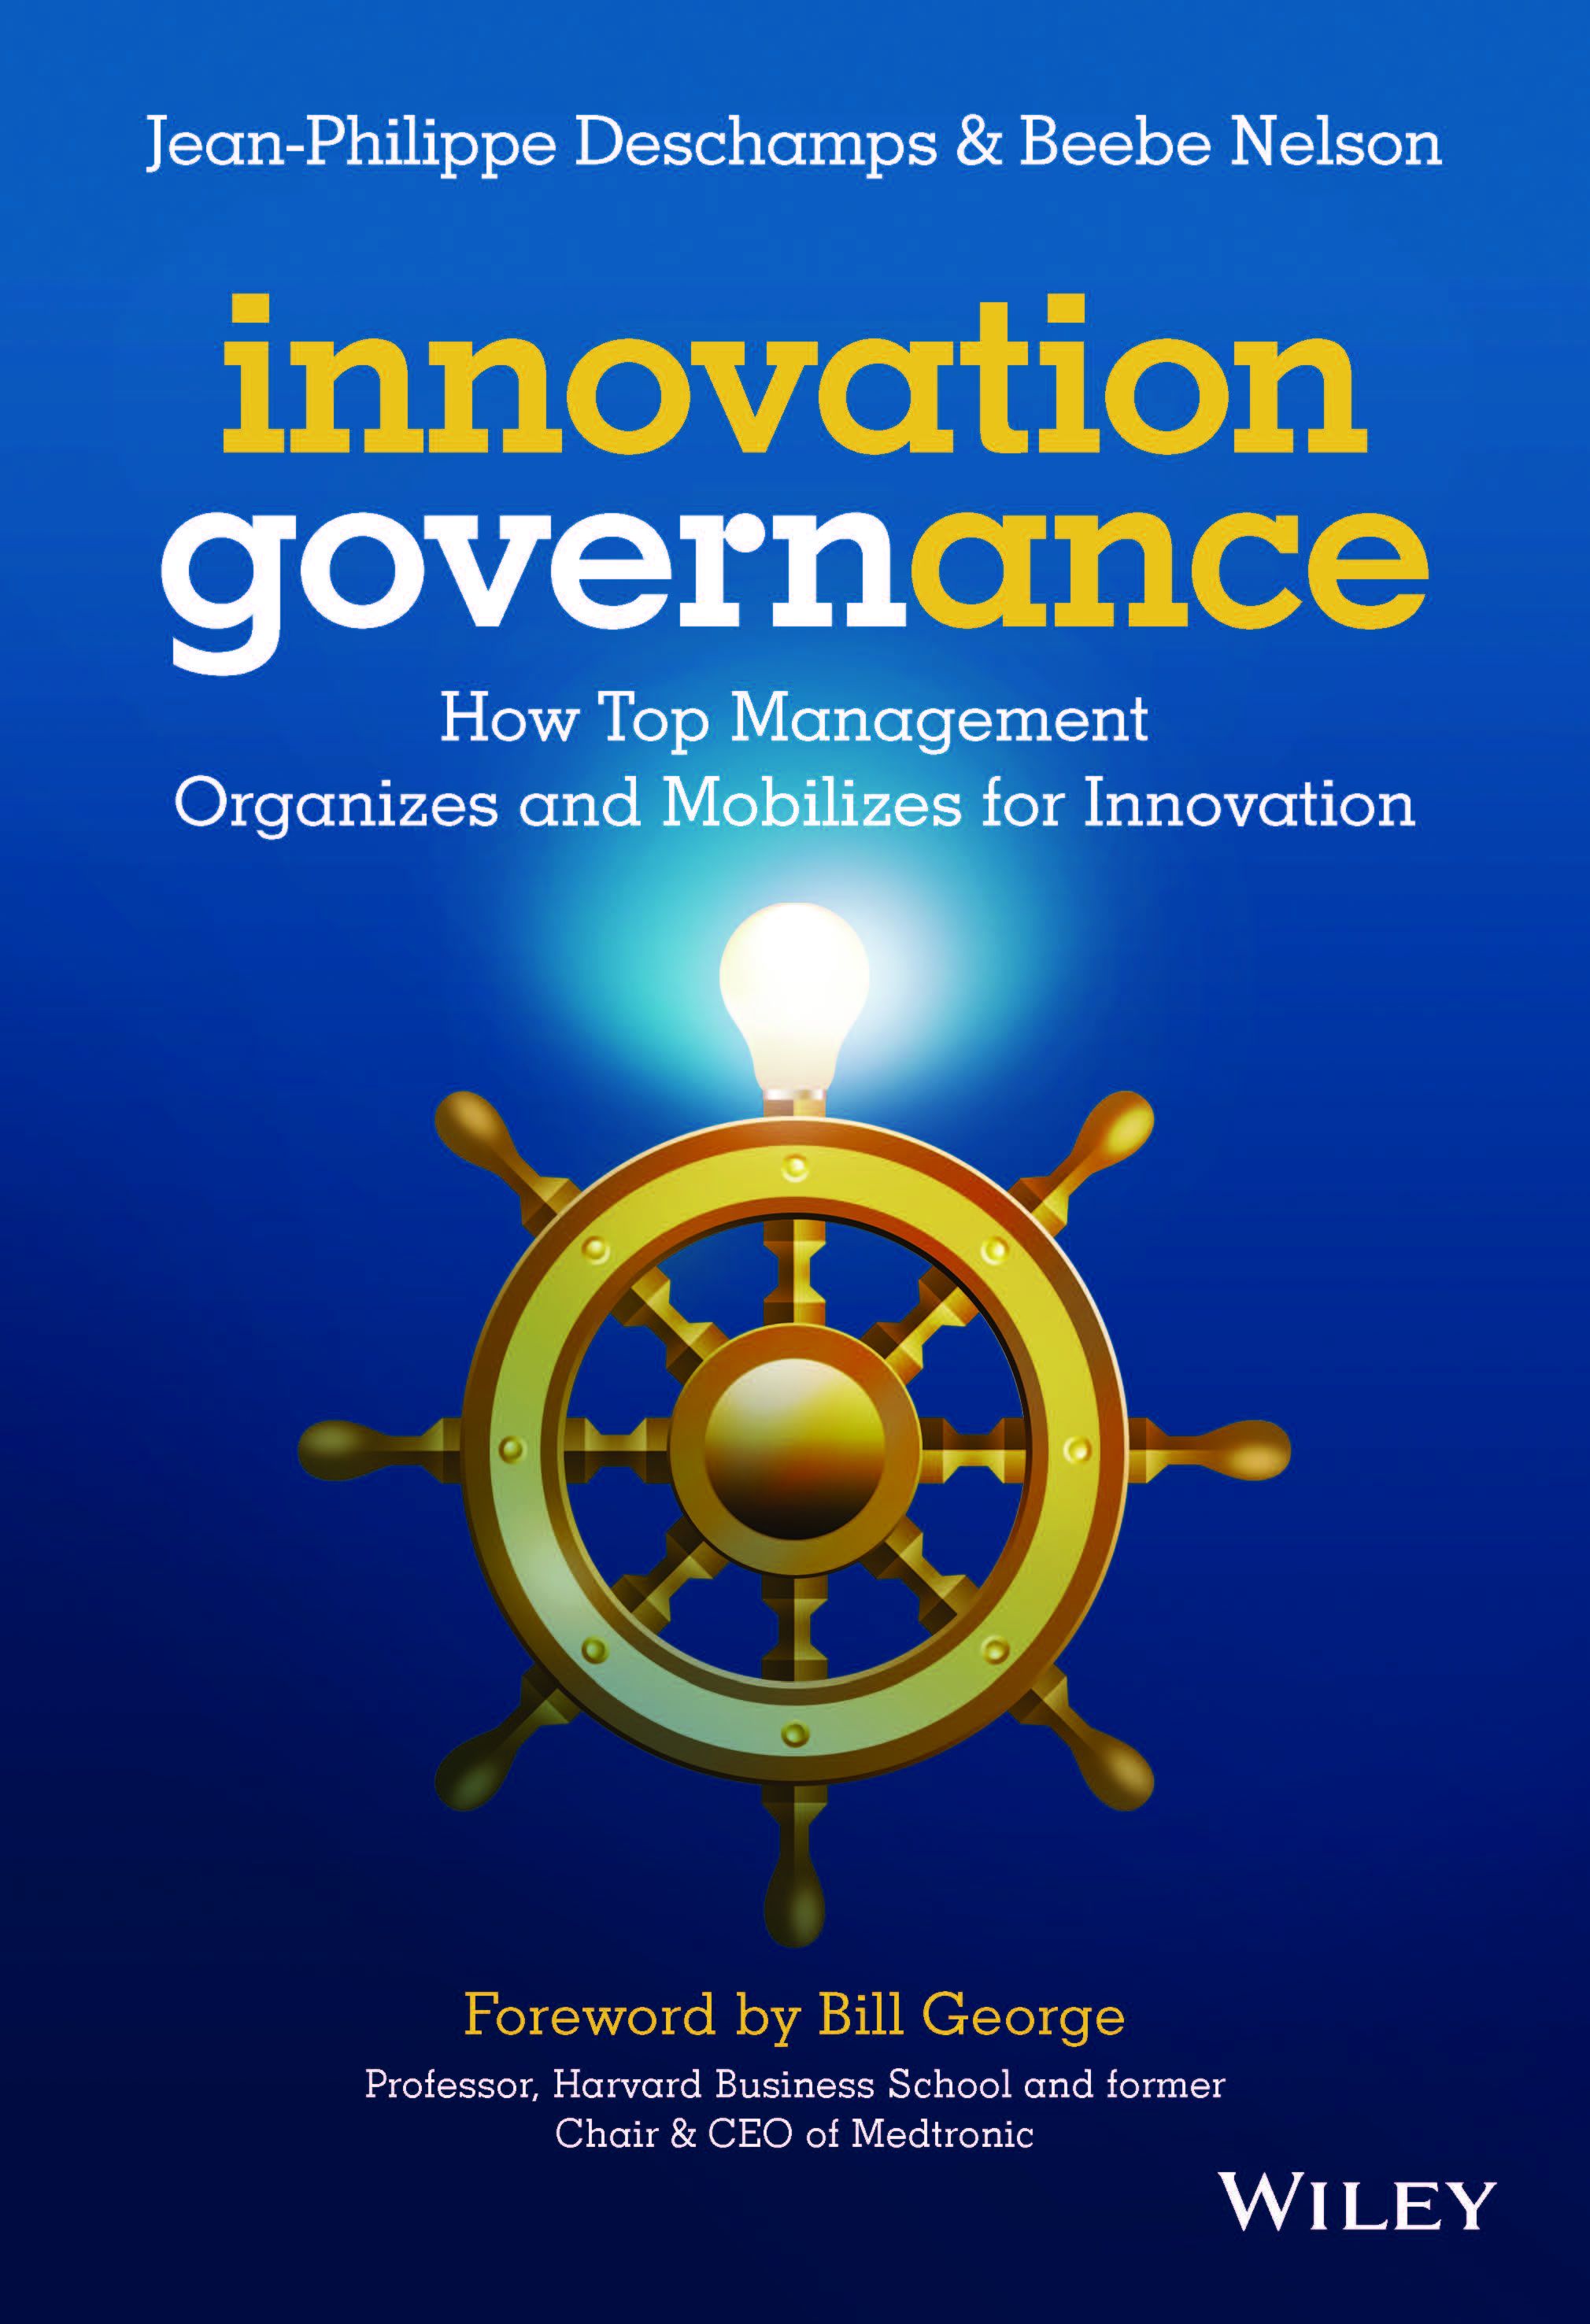 Innovation Governance: Why Should Top Management Care ...